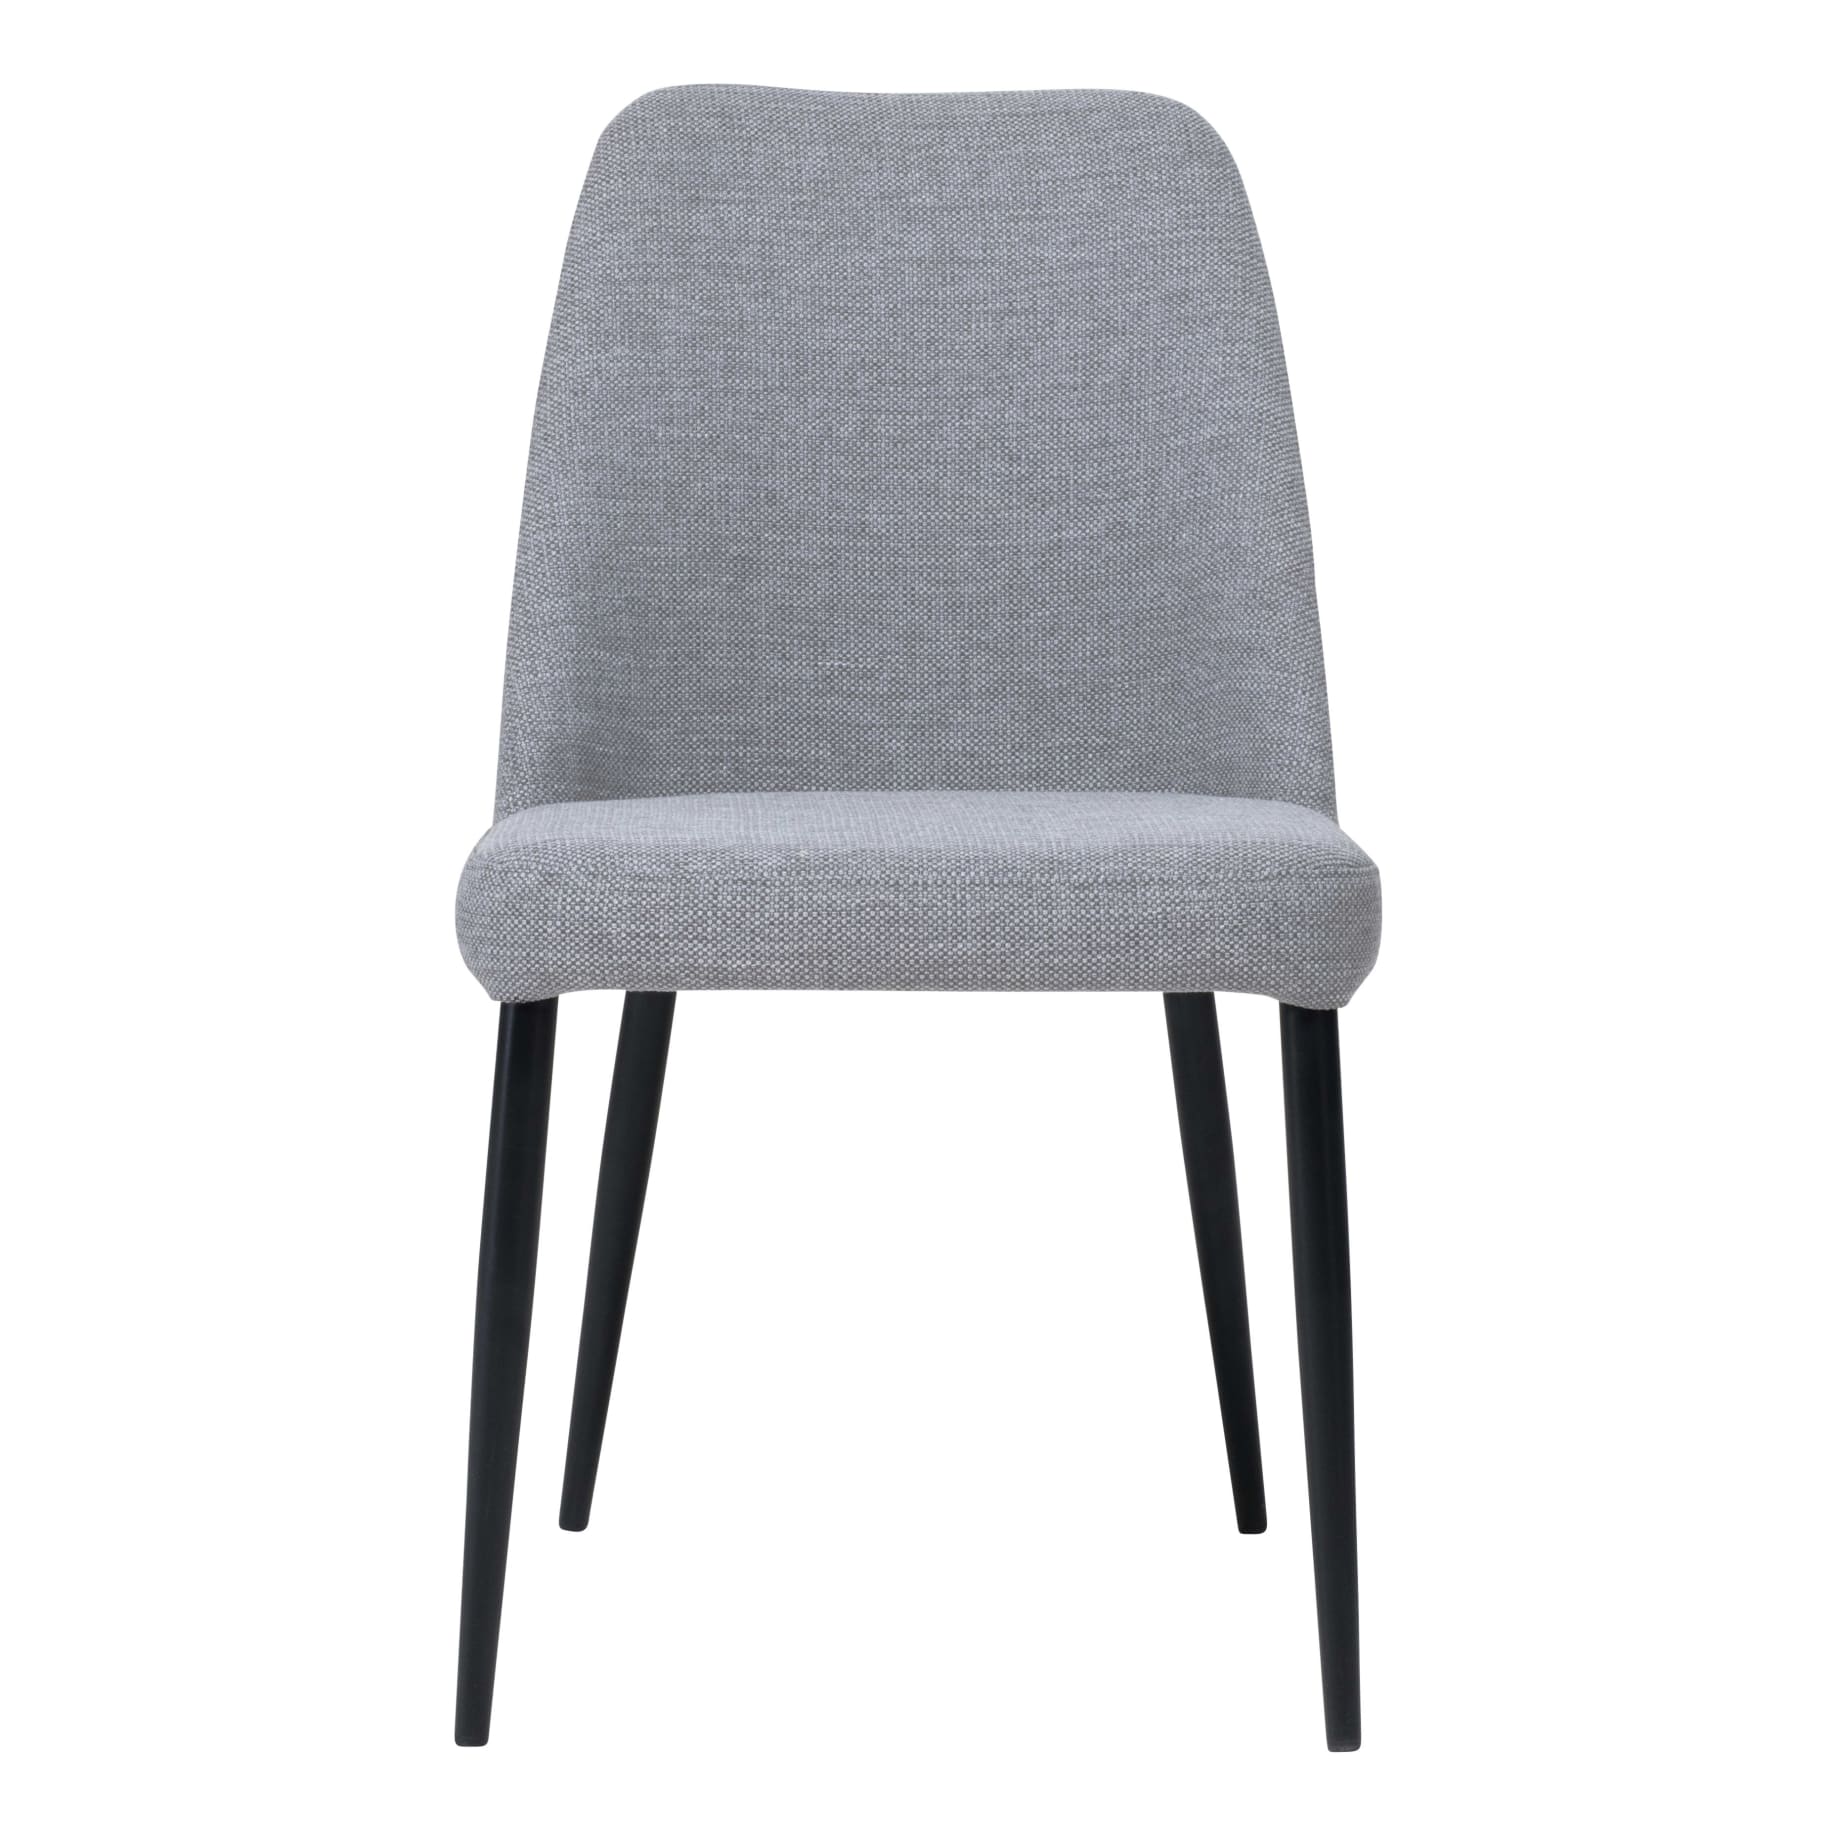 Avon Dining Chair in Light Grey Fabric / Black Leg